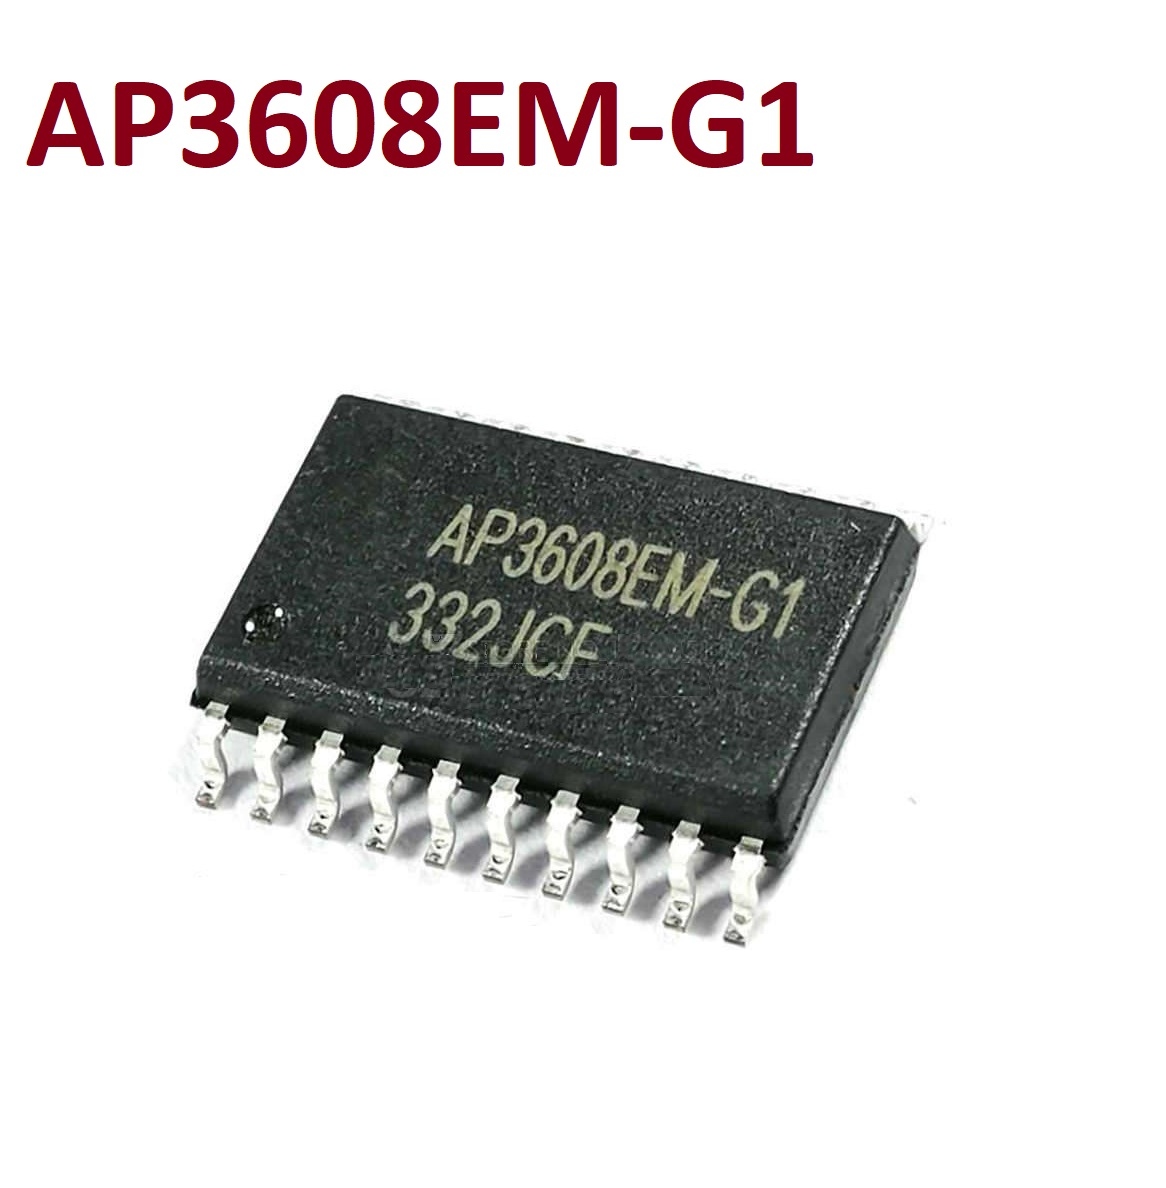 AP3608EM-G1